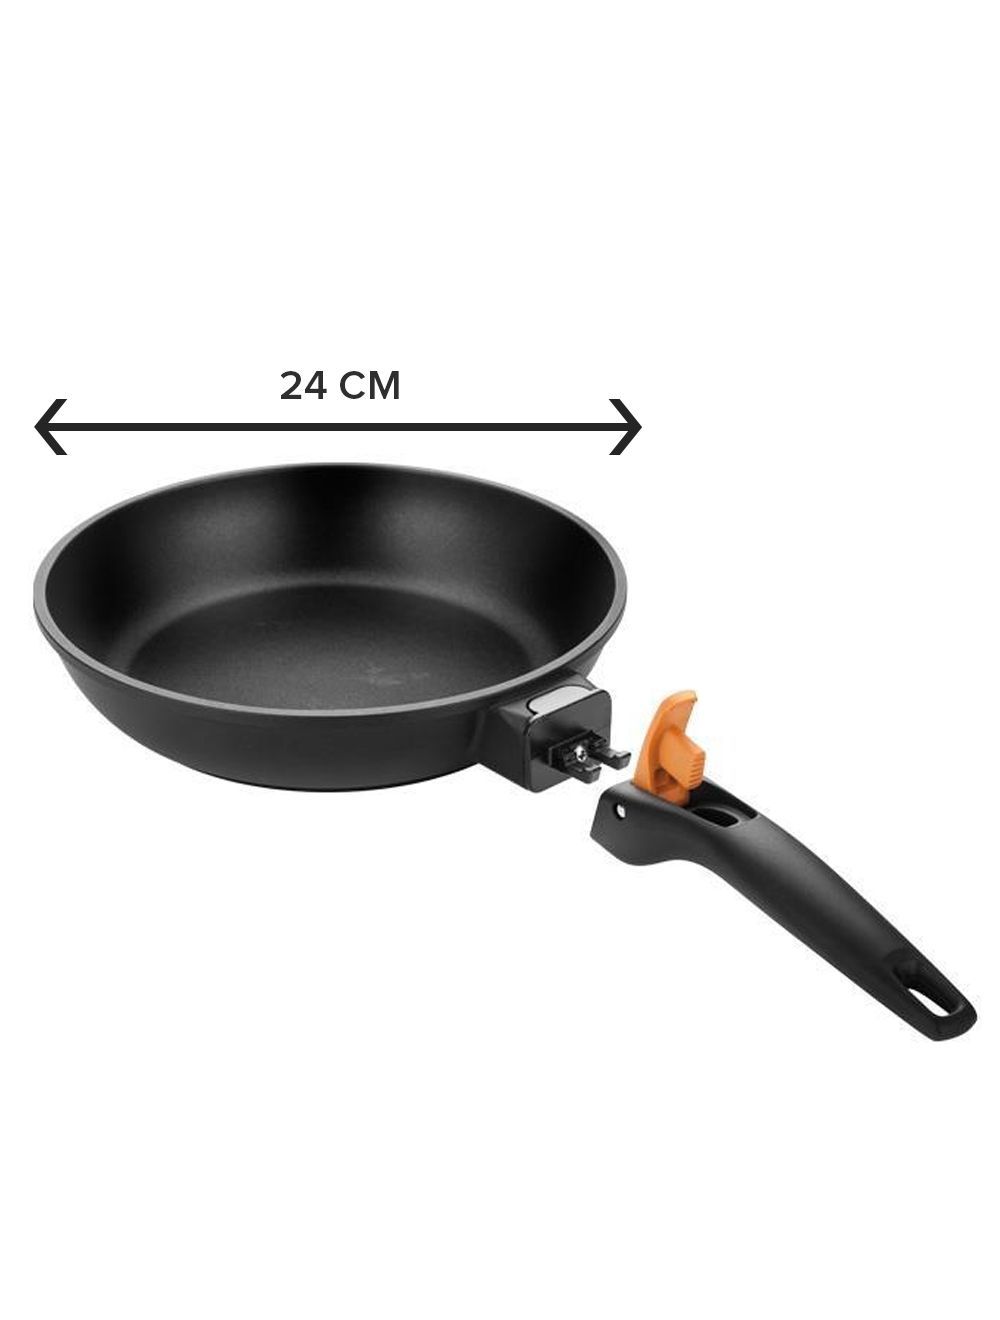 SMART CLICK Frying Pan 24cm